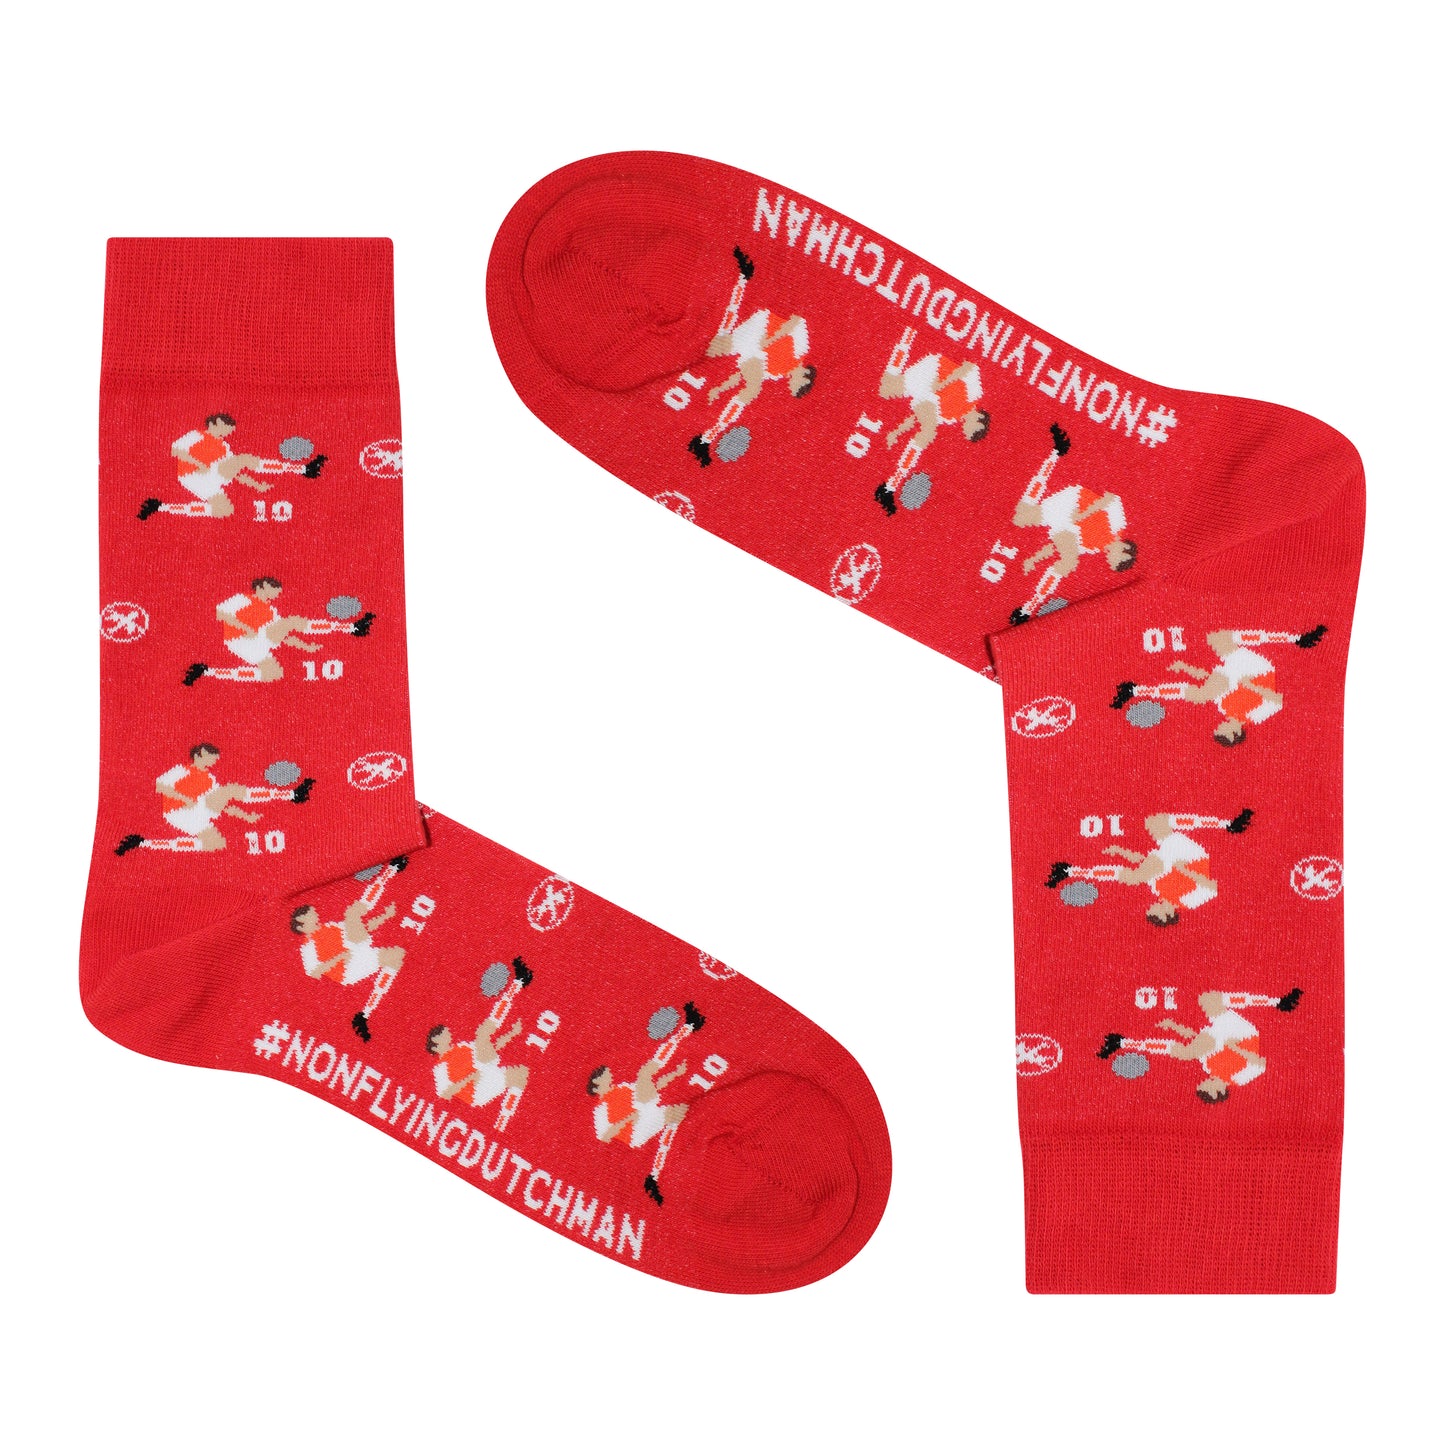 Bergkamp 'The No Flying Dutchman' | Retro Shirt Socks | Red